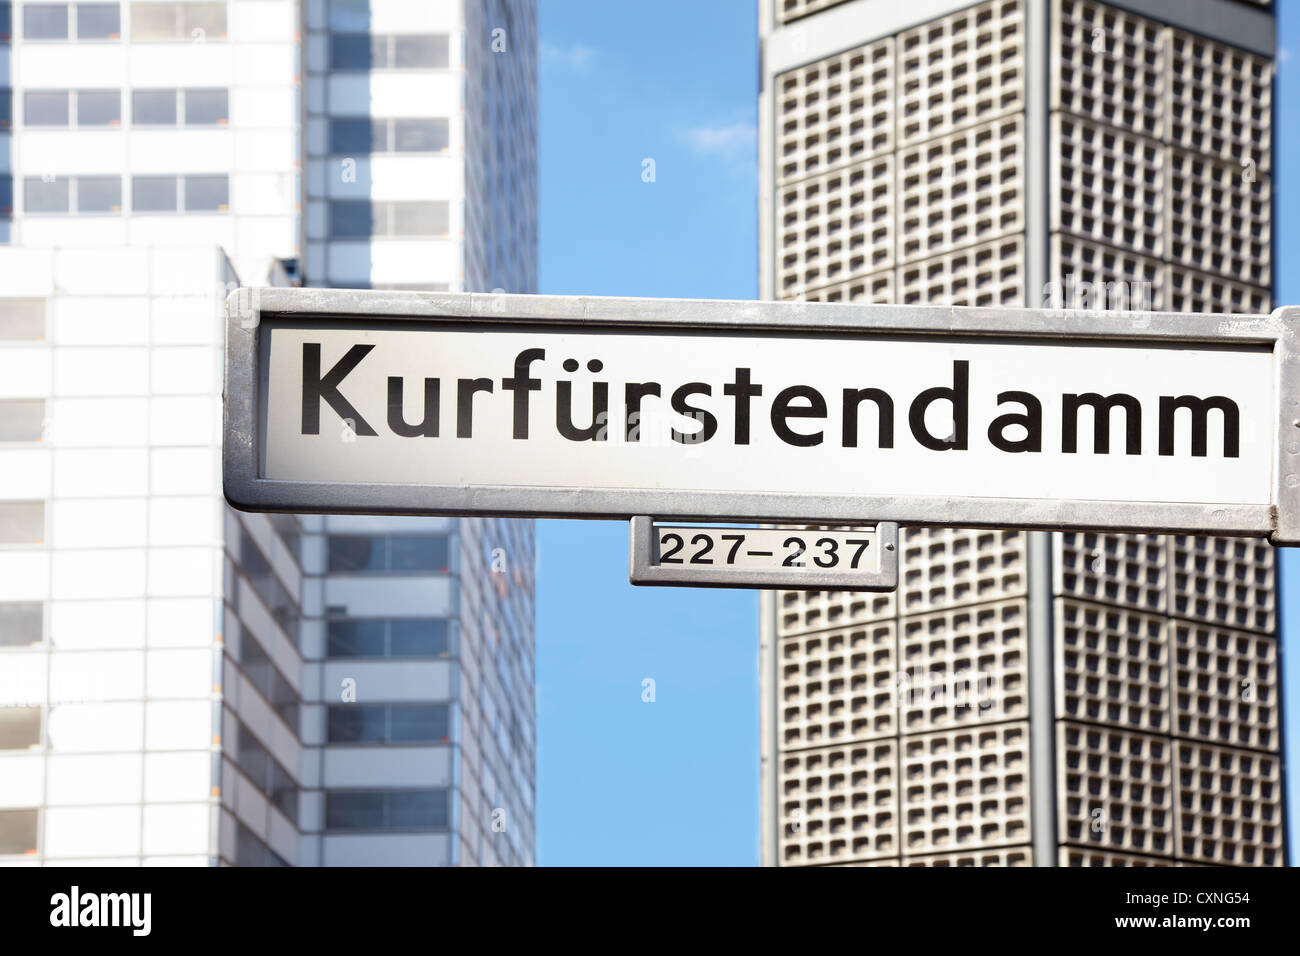 Kurfurstendamm, shopping street in Berlin Stock Photo